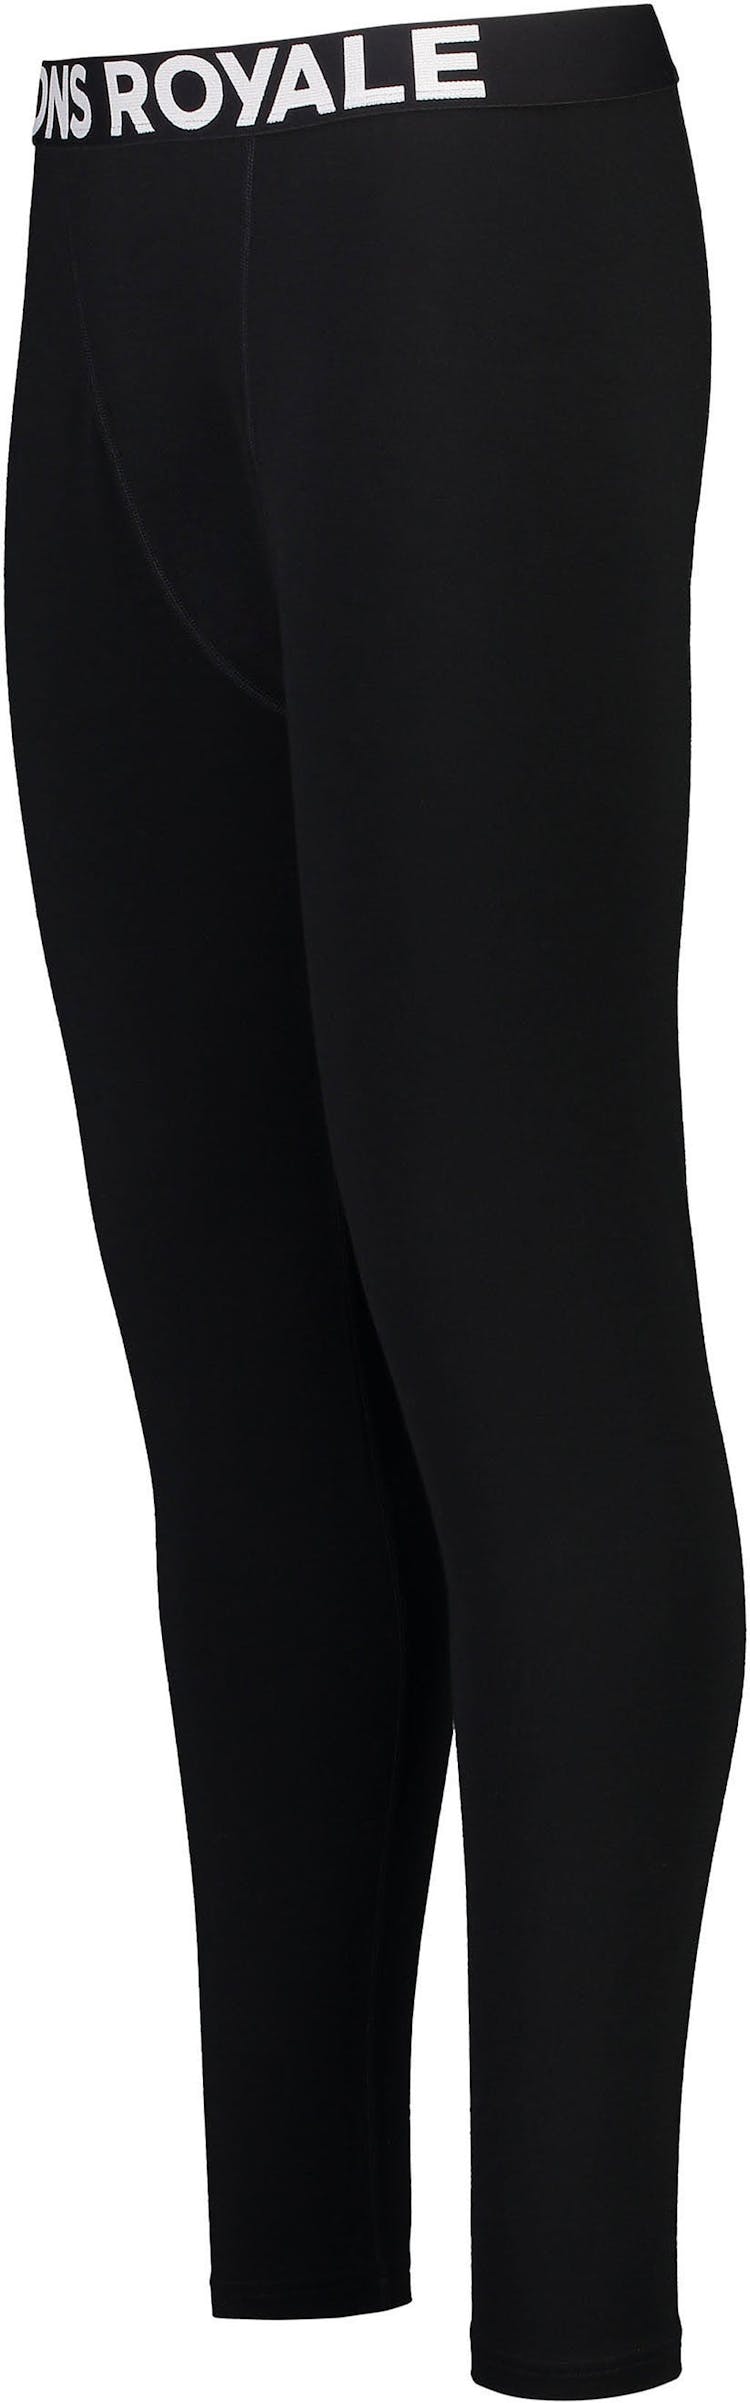 Product gallery image number 1 for product Cascade Merino Flex 200 Legging - Men's